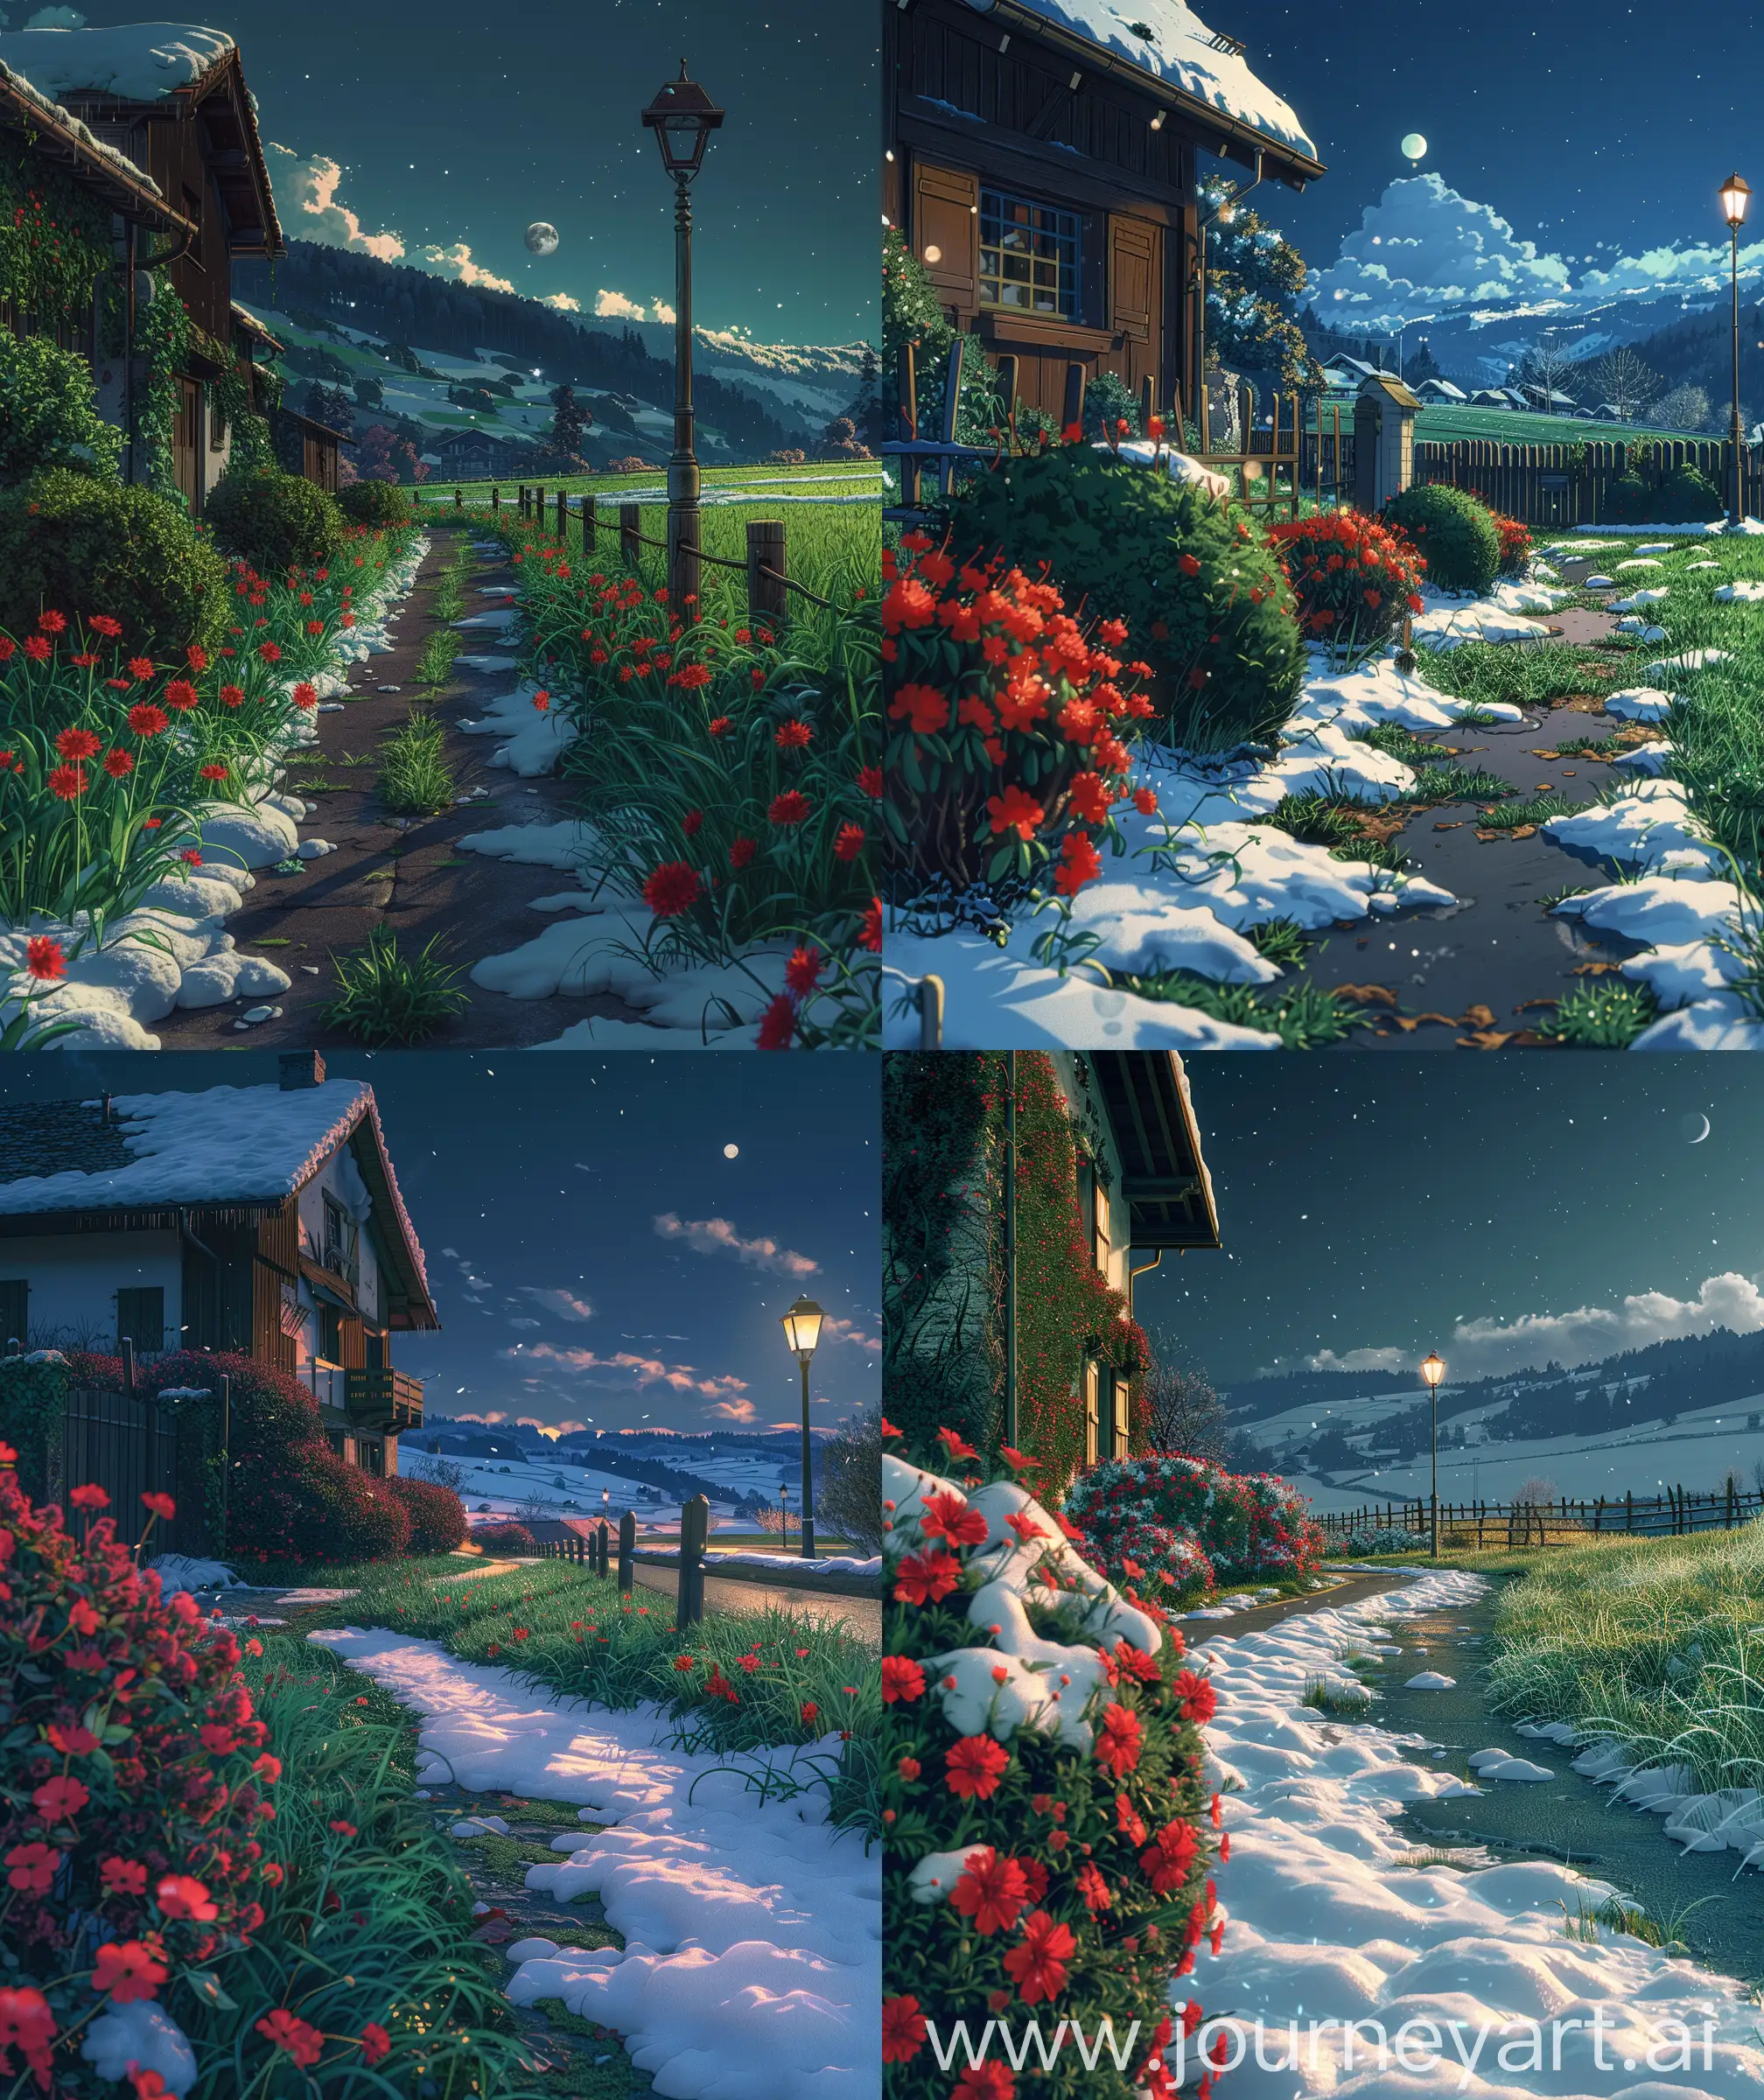 Swiss-Countryside-at-Night-Enchanting-AnimeStyle-Landscape